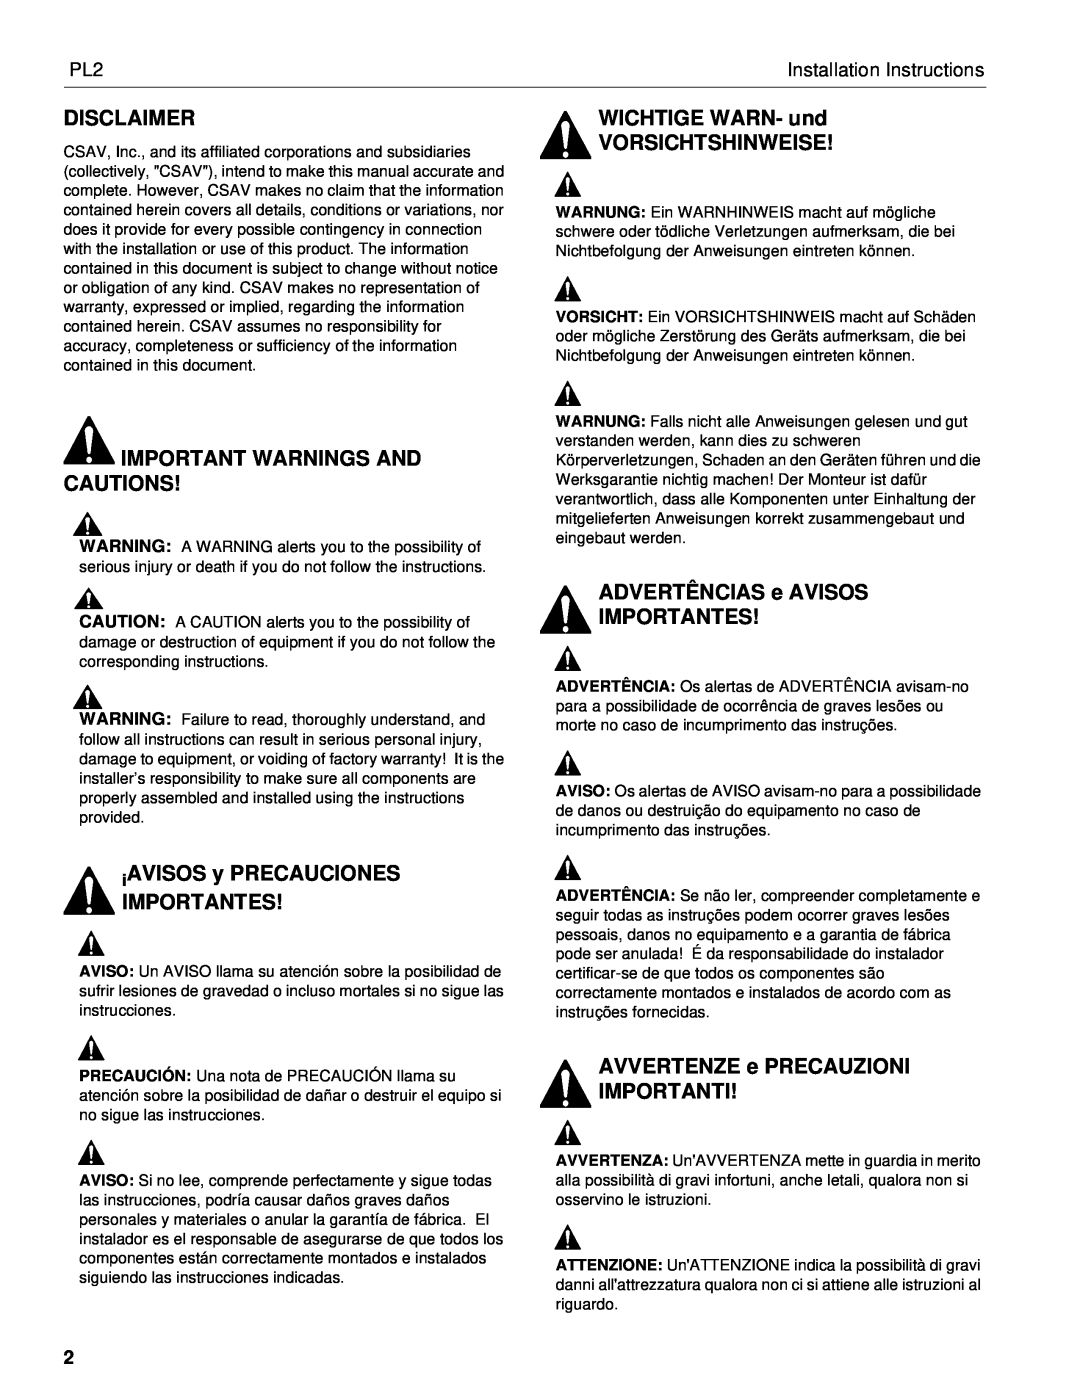 Chief Manufacturing PL2 Disclaimer, Important Warnings And Cautions, iAVISOS y PRECAUCIONES IMPORTANTES 